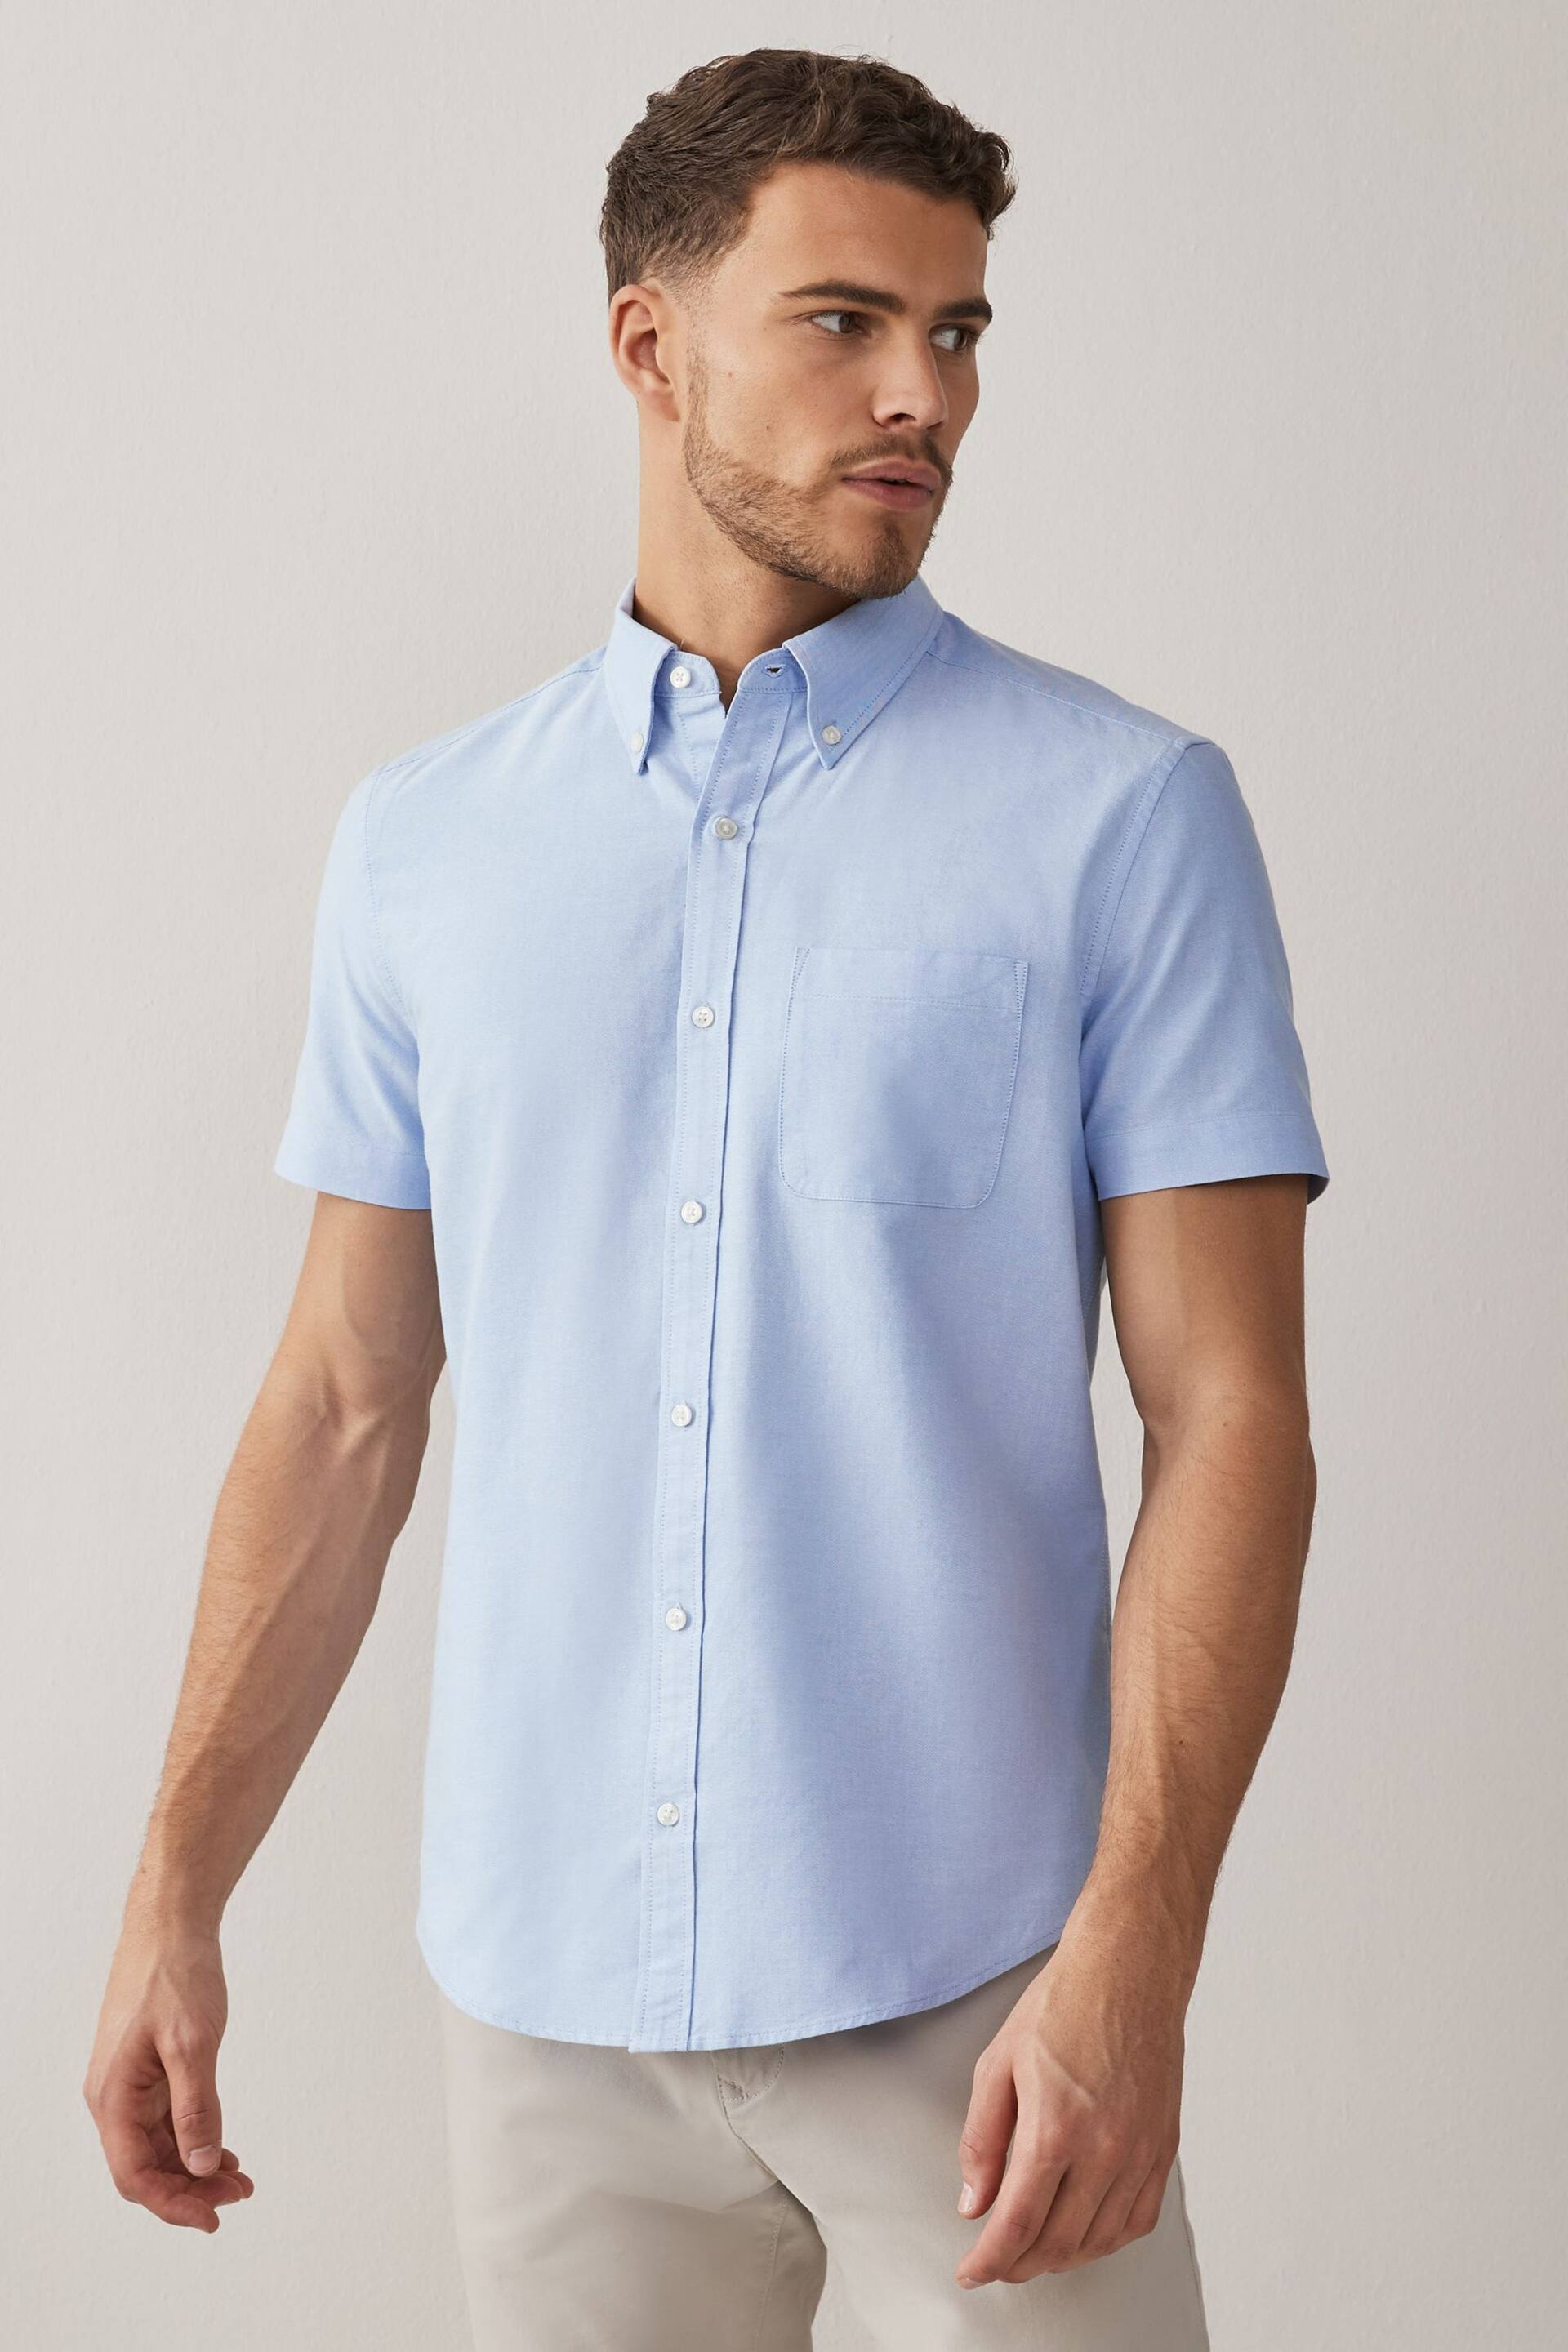 White/Blue/Navy 3 Pack Short Sleeve Oxford Shirt 3 Pack - Image 6 of 10